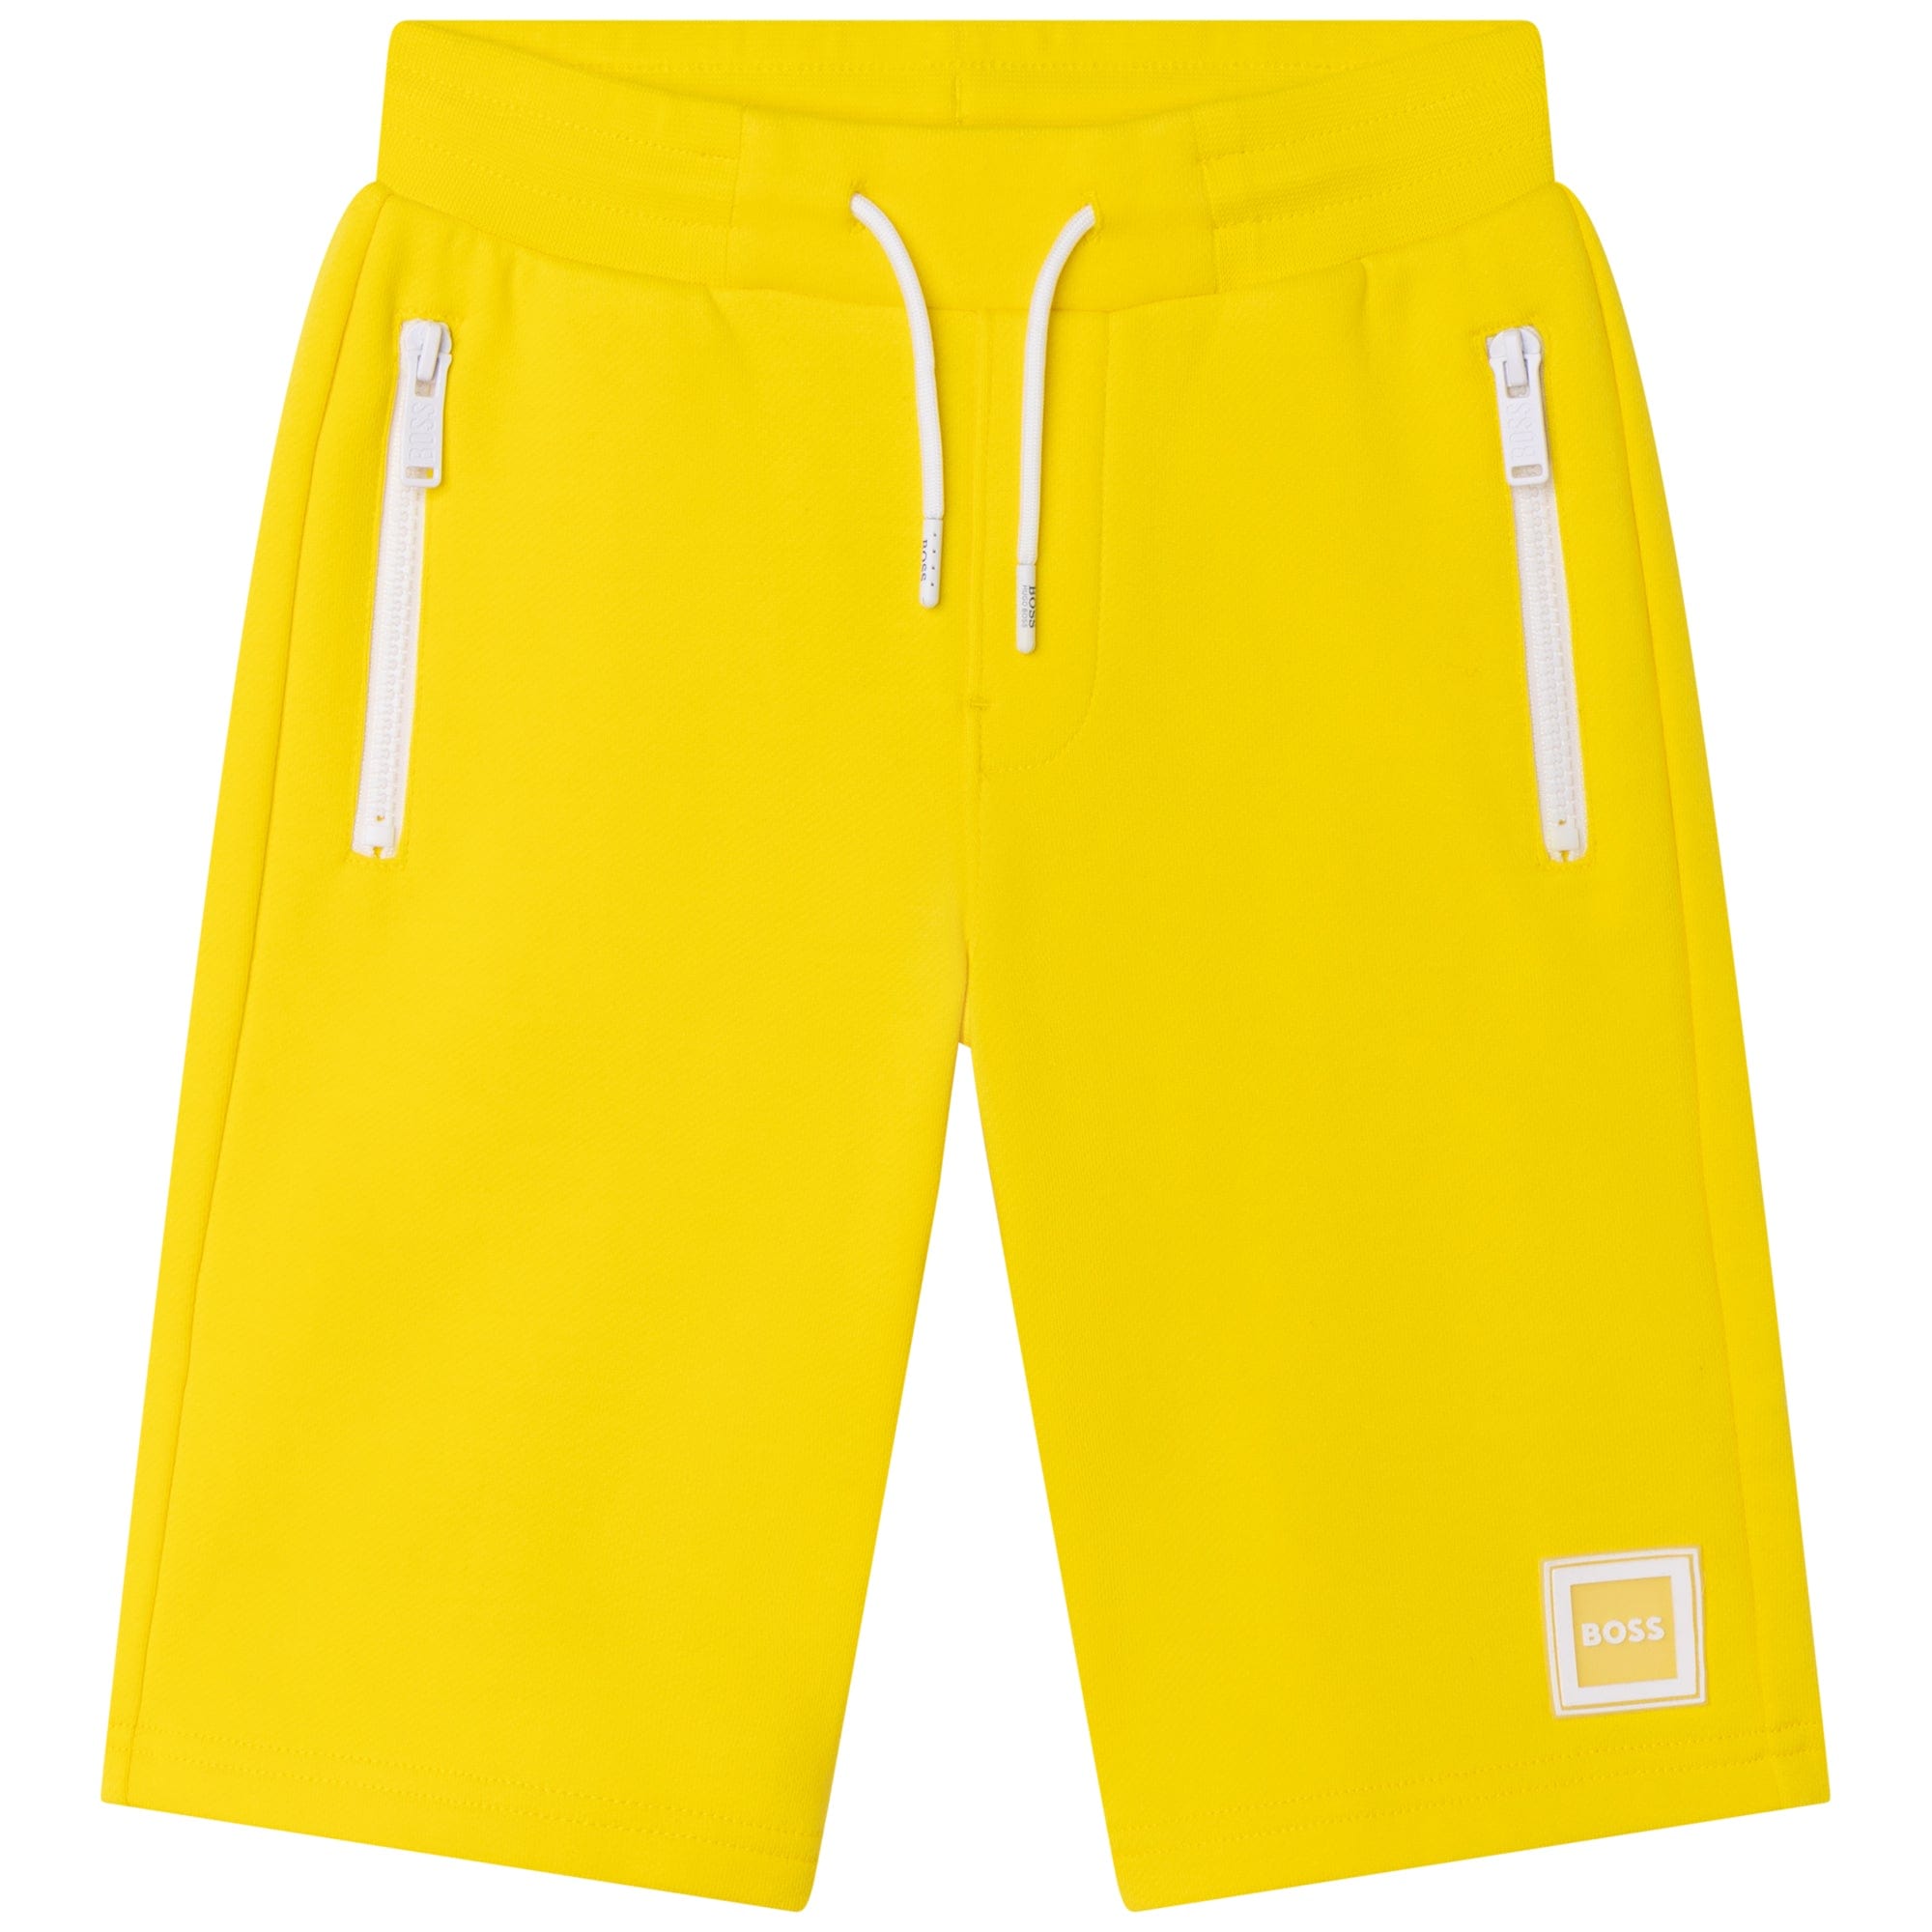 HUGO BOSS - Bermuda Short - Yellow